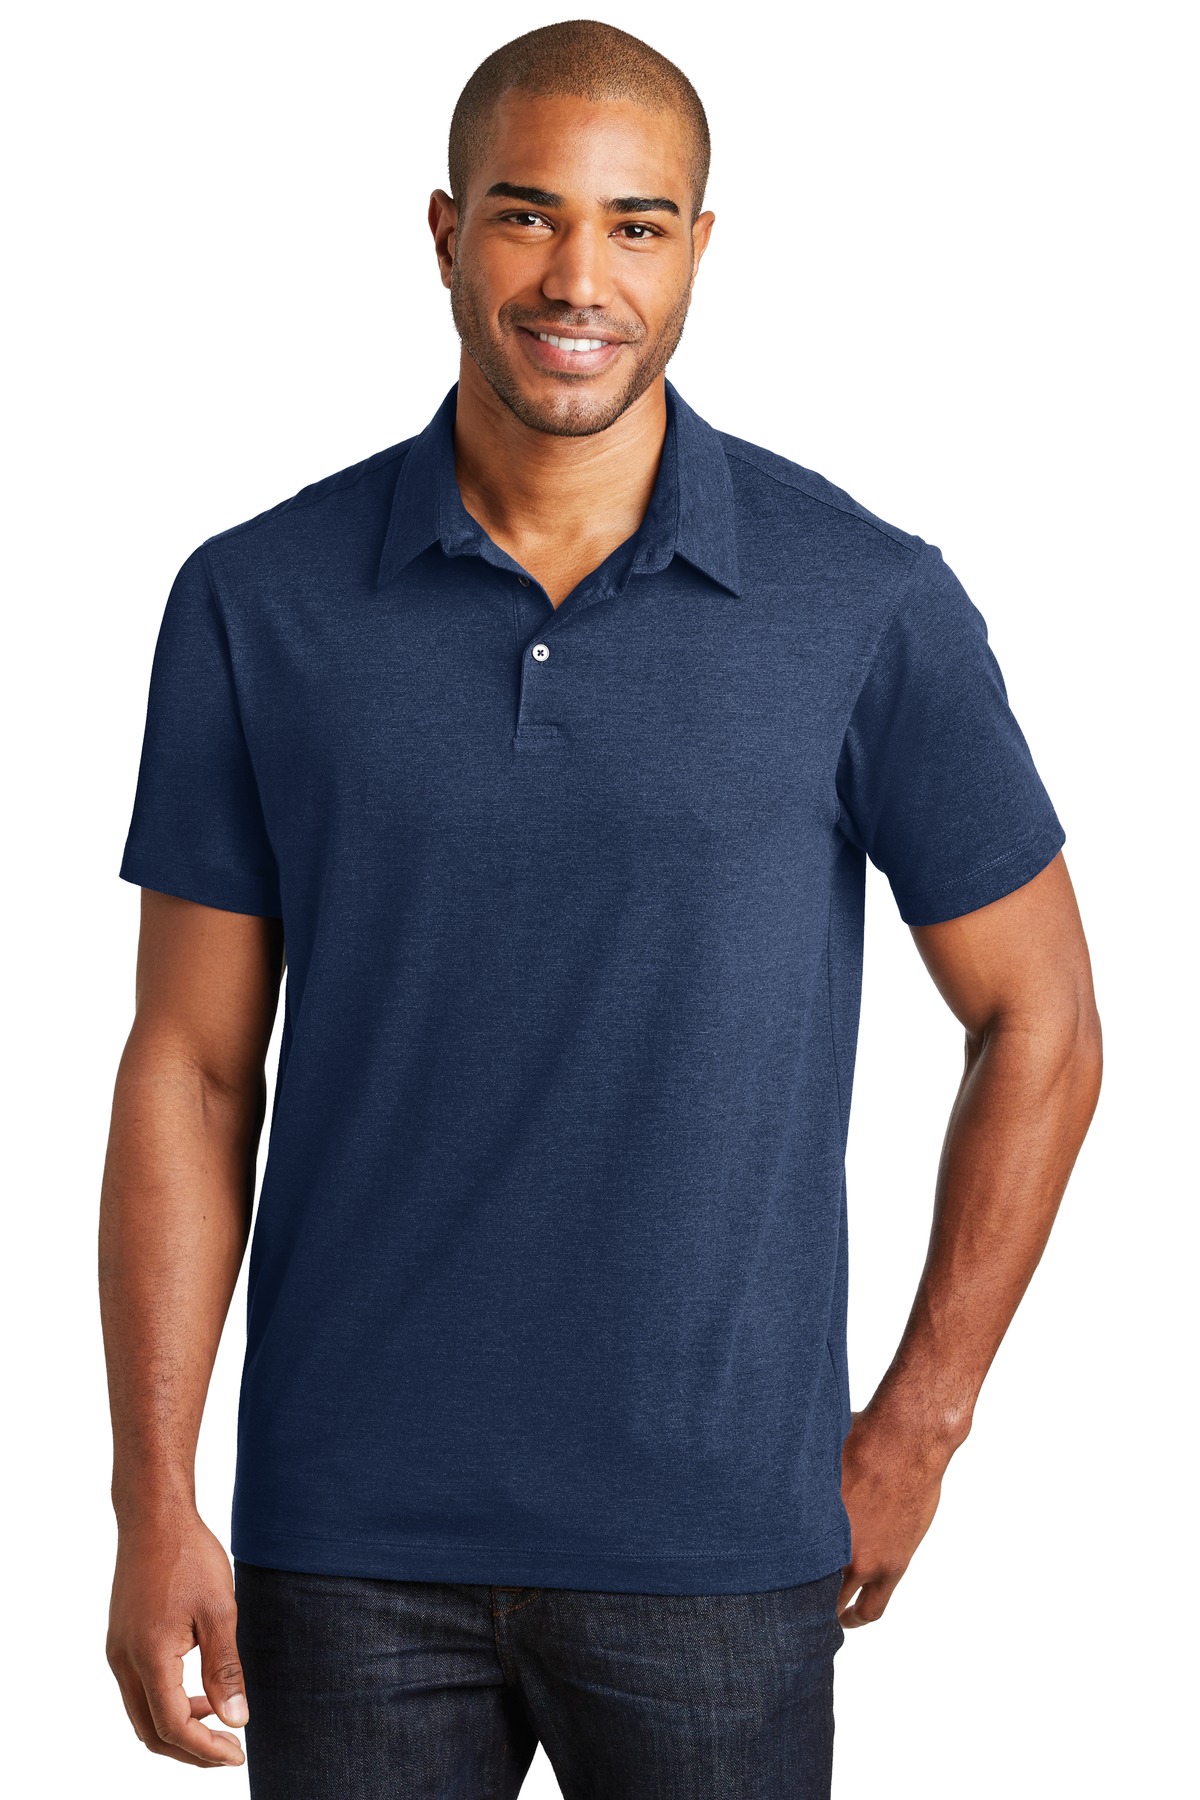 Authority K577 Meridian | Polo Cotton | ShirtSpace Port Blend